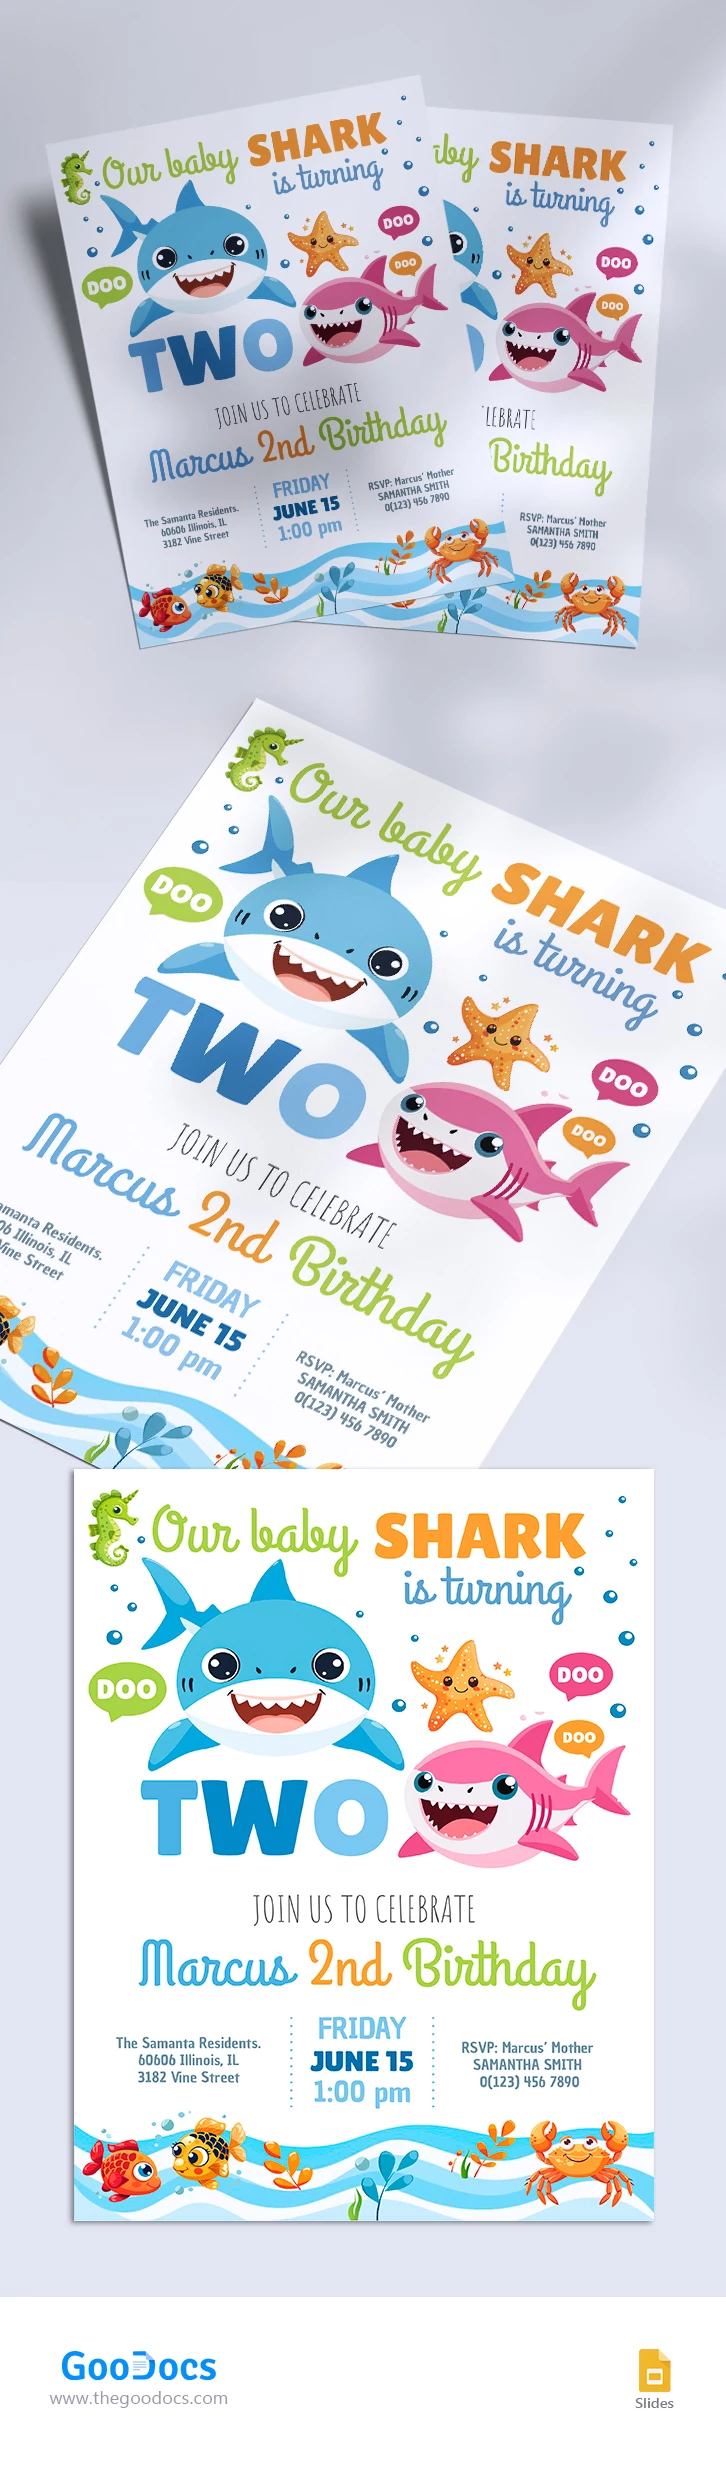 Invitación de Baby Shark - free Google Docs Template - 10068413